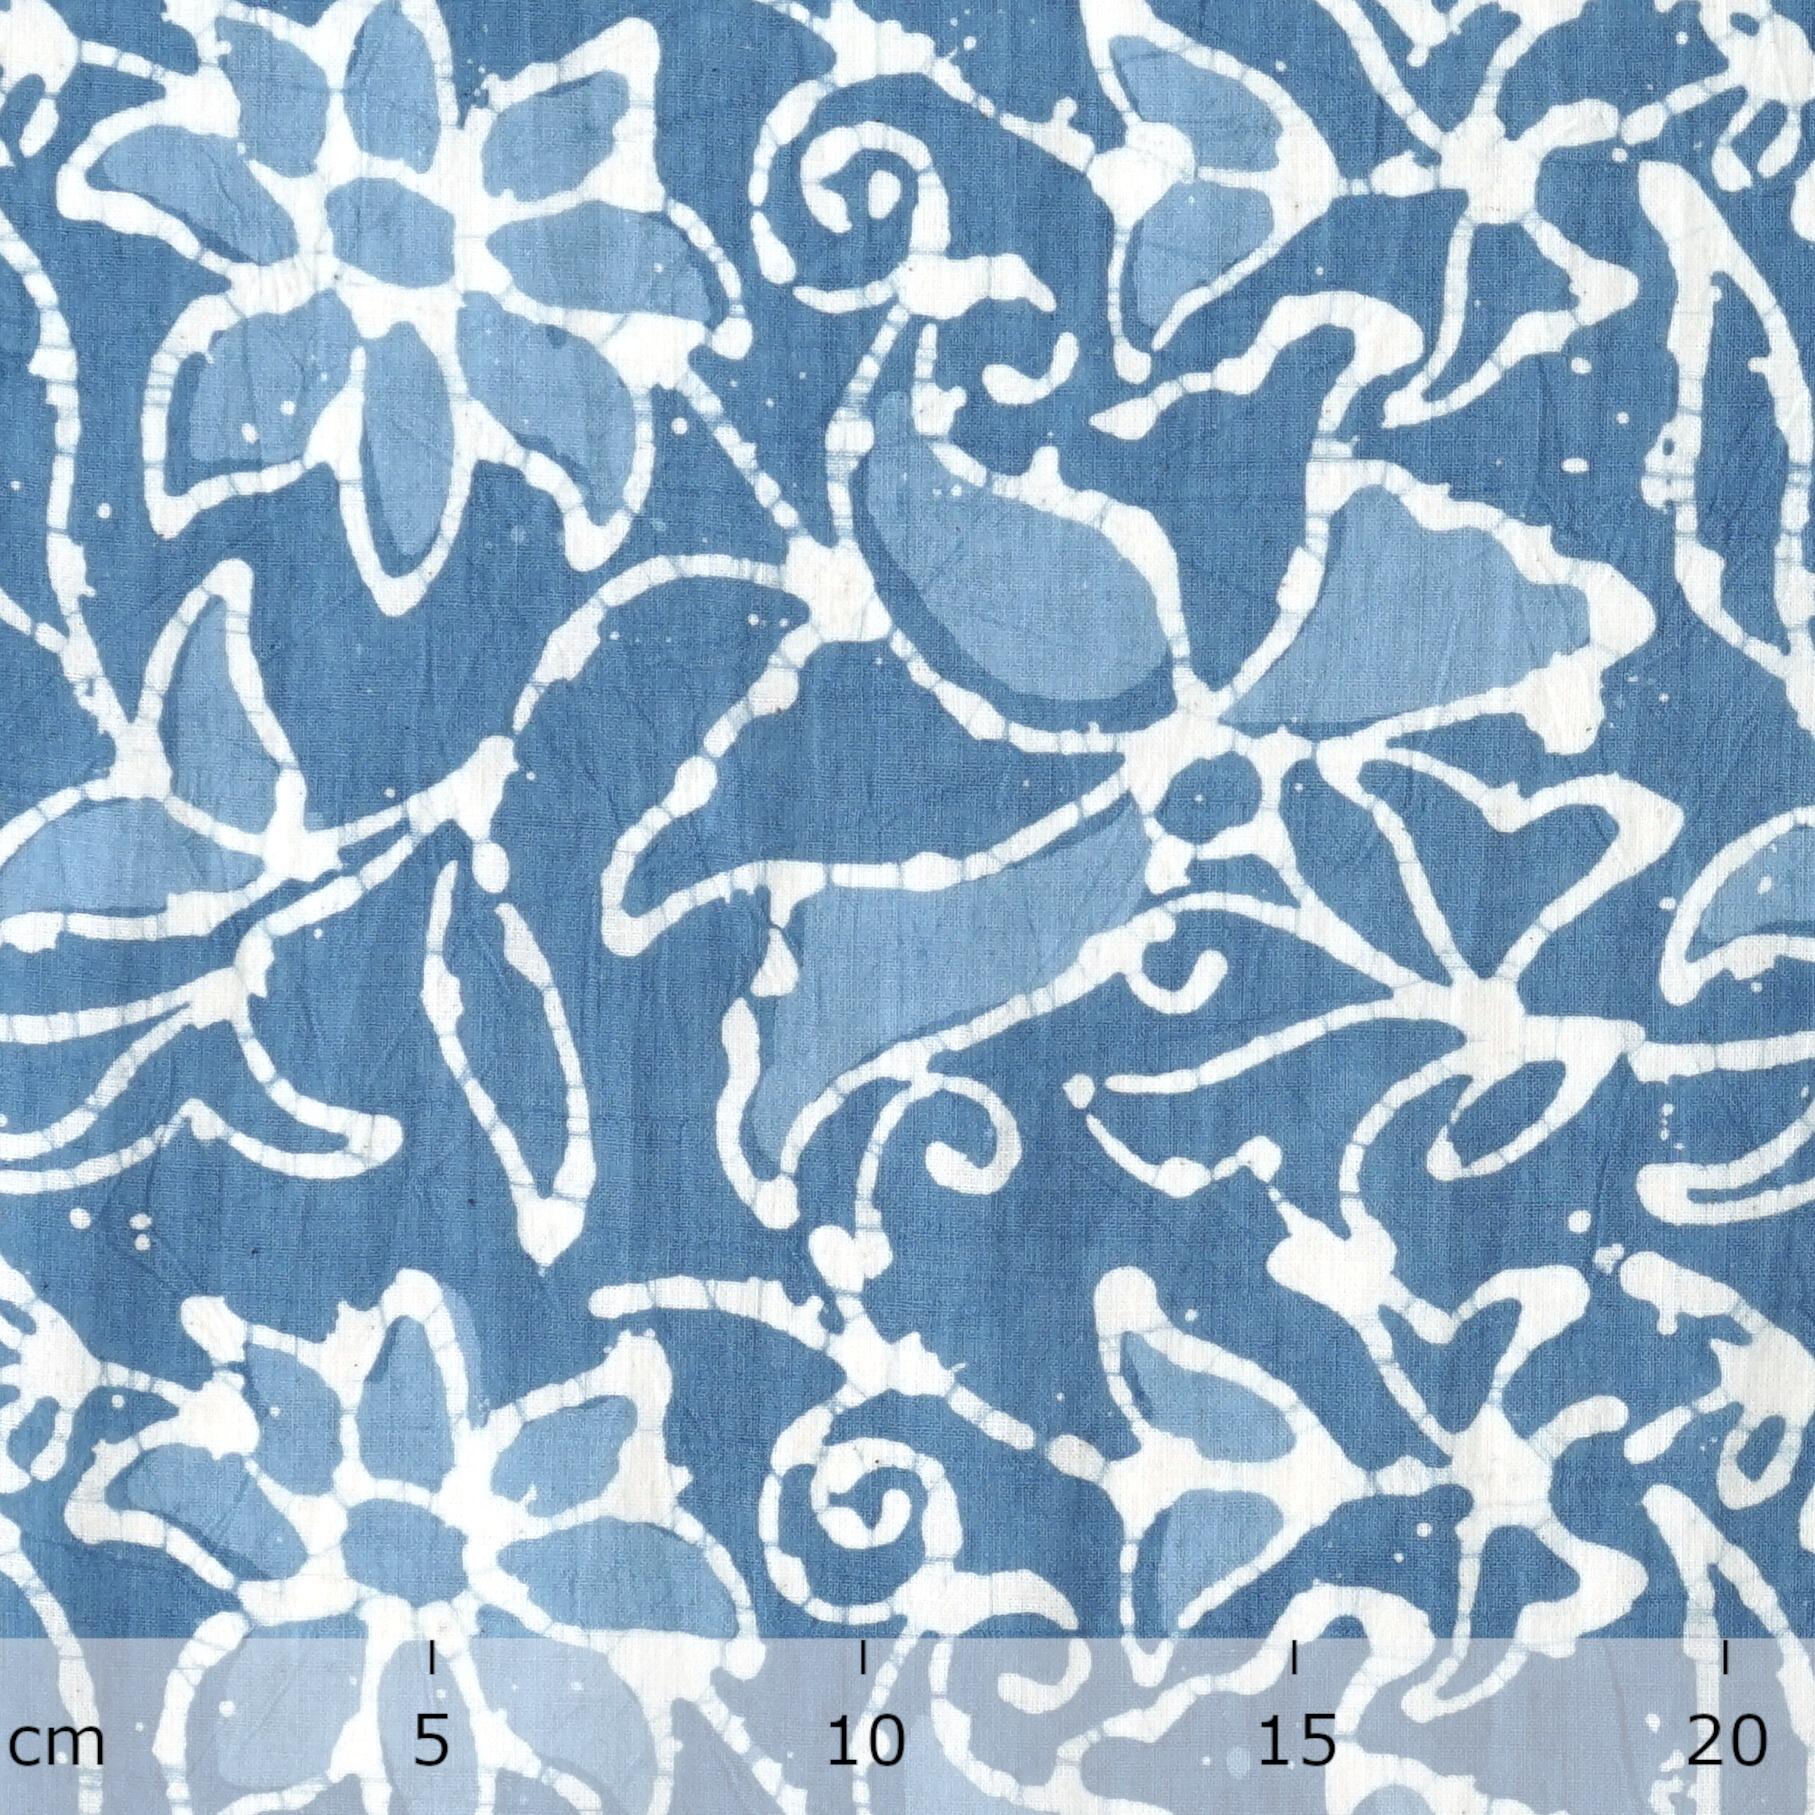 100% Block-Printed Batik Cotton Fabric From India - Blooming Blue Motif - Ruler